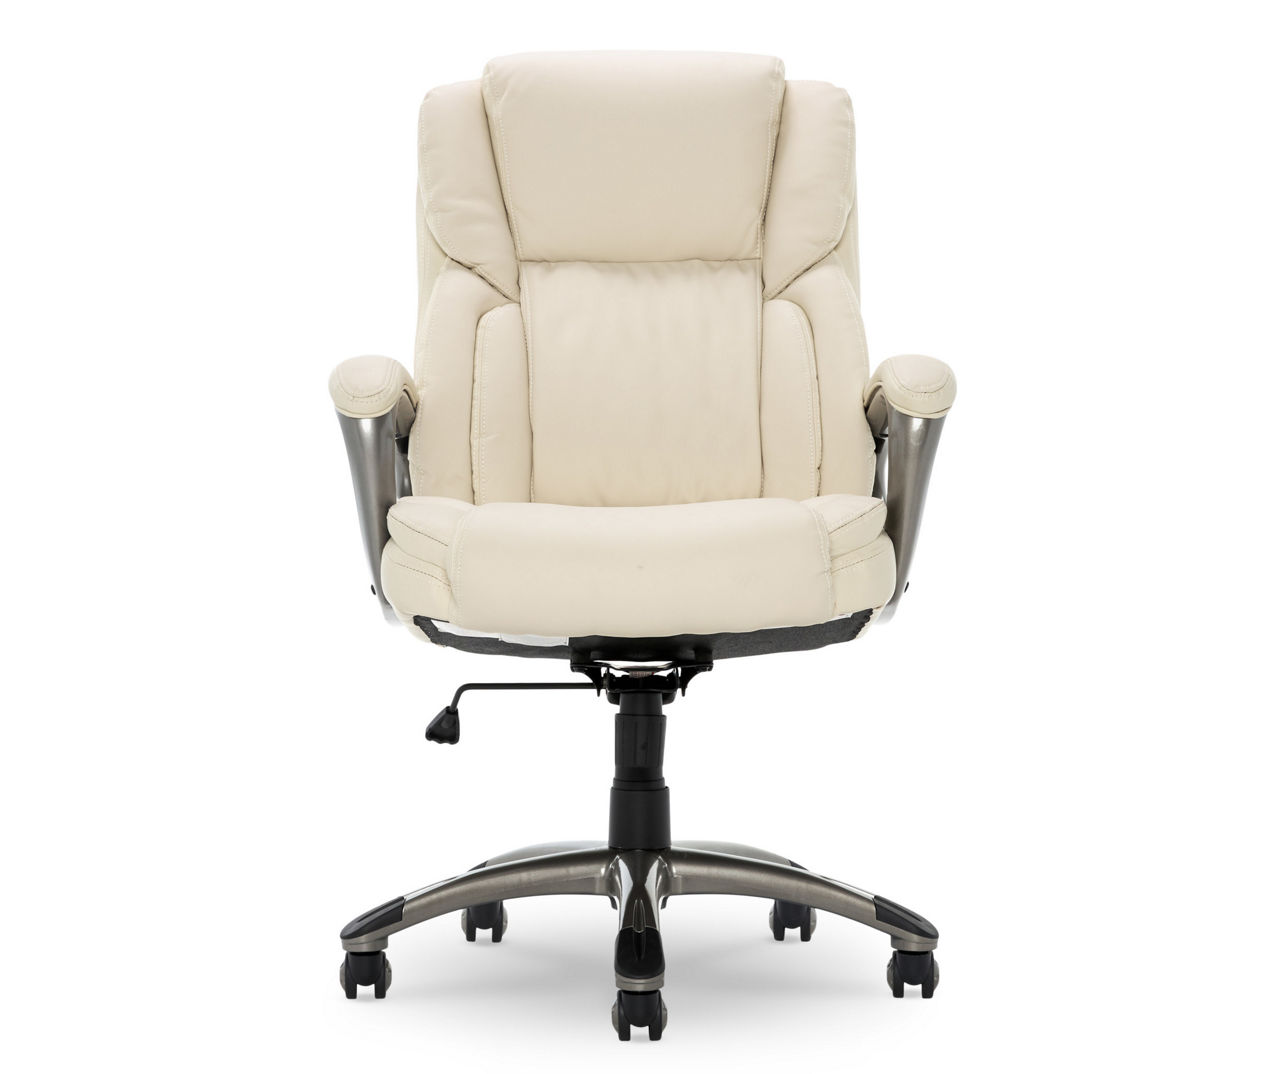 Serta Serta Garret Executive Bonded Leather Office Chair | Big Lots